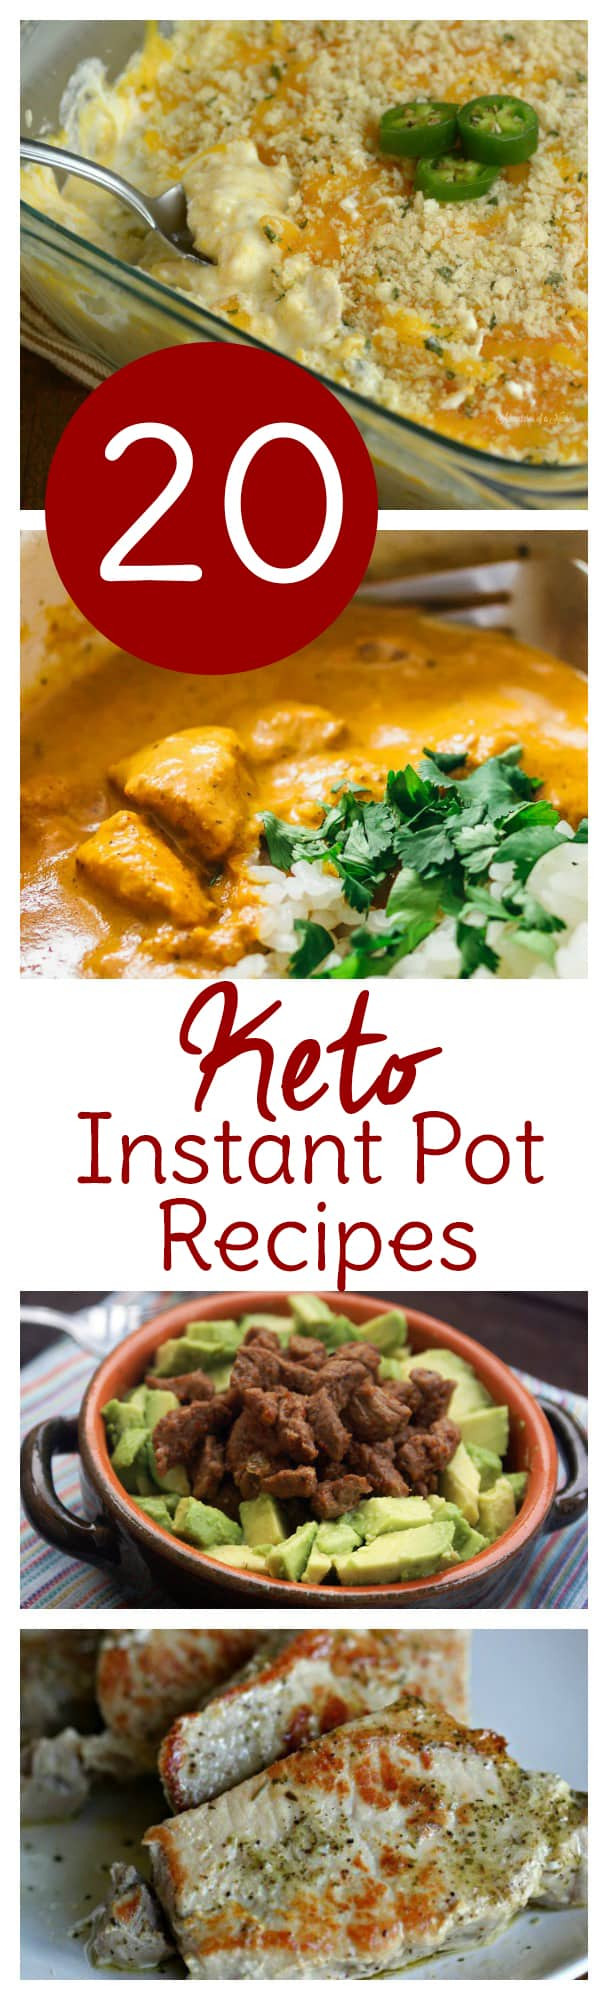 Instant Pot Keto Recipes Videos
 20 Instant Pot Keto Recipes to Make This Week